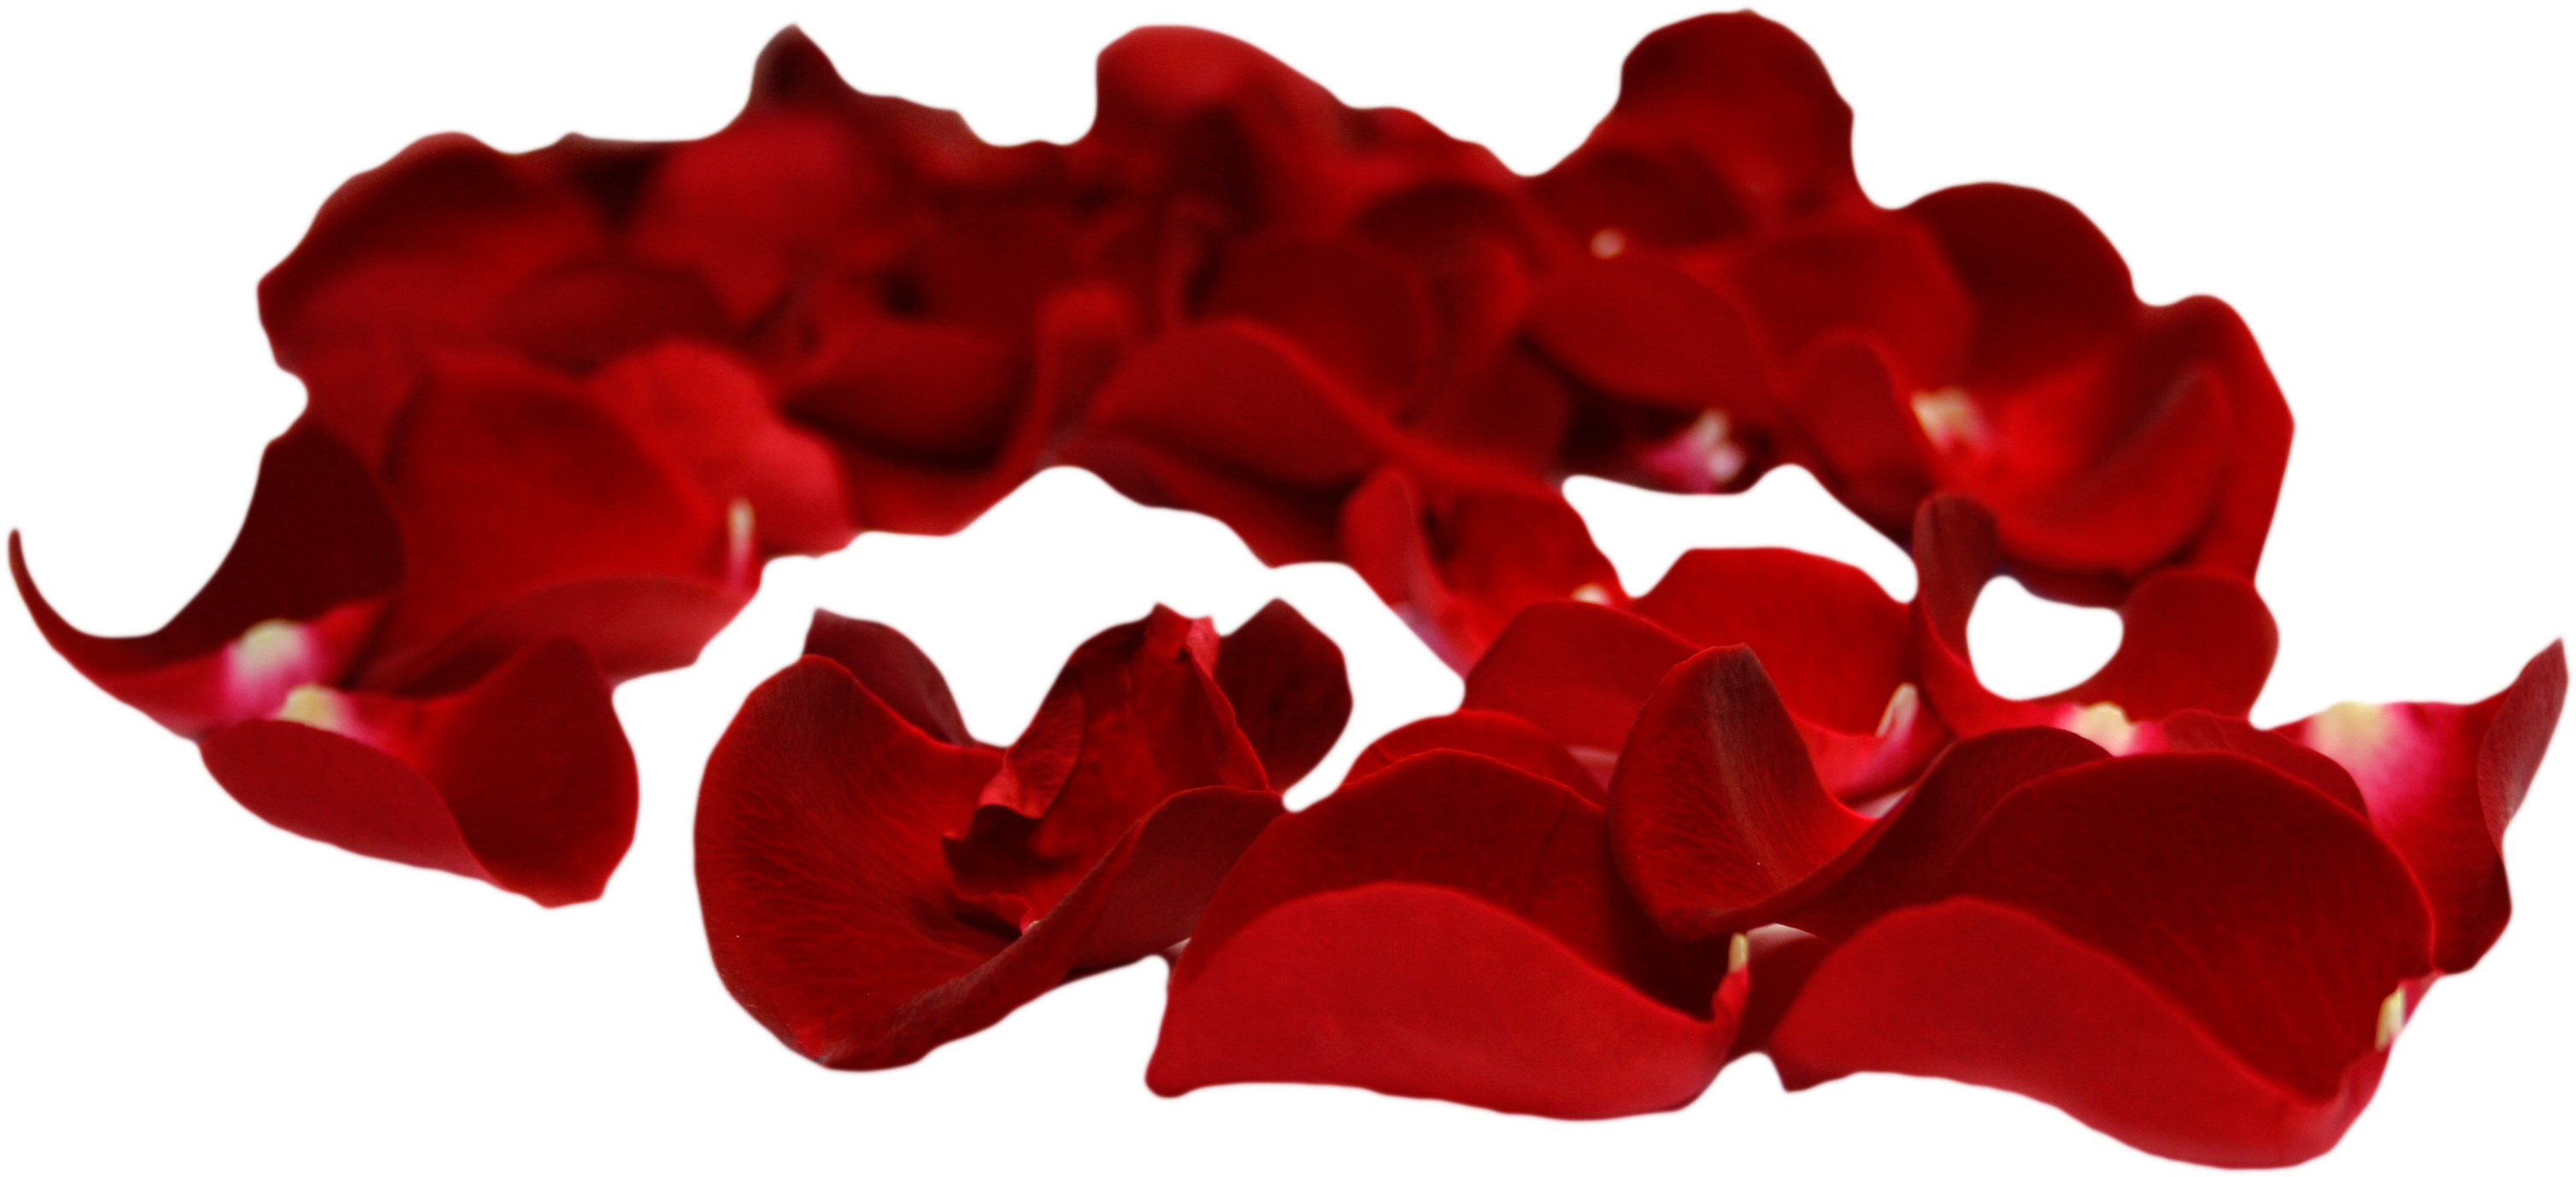 Flower Petals PNG Clipart Background